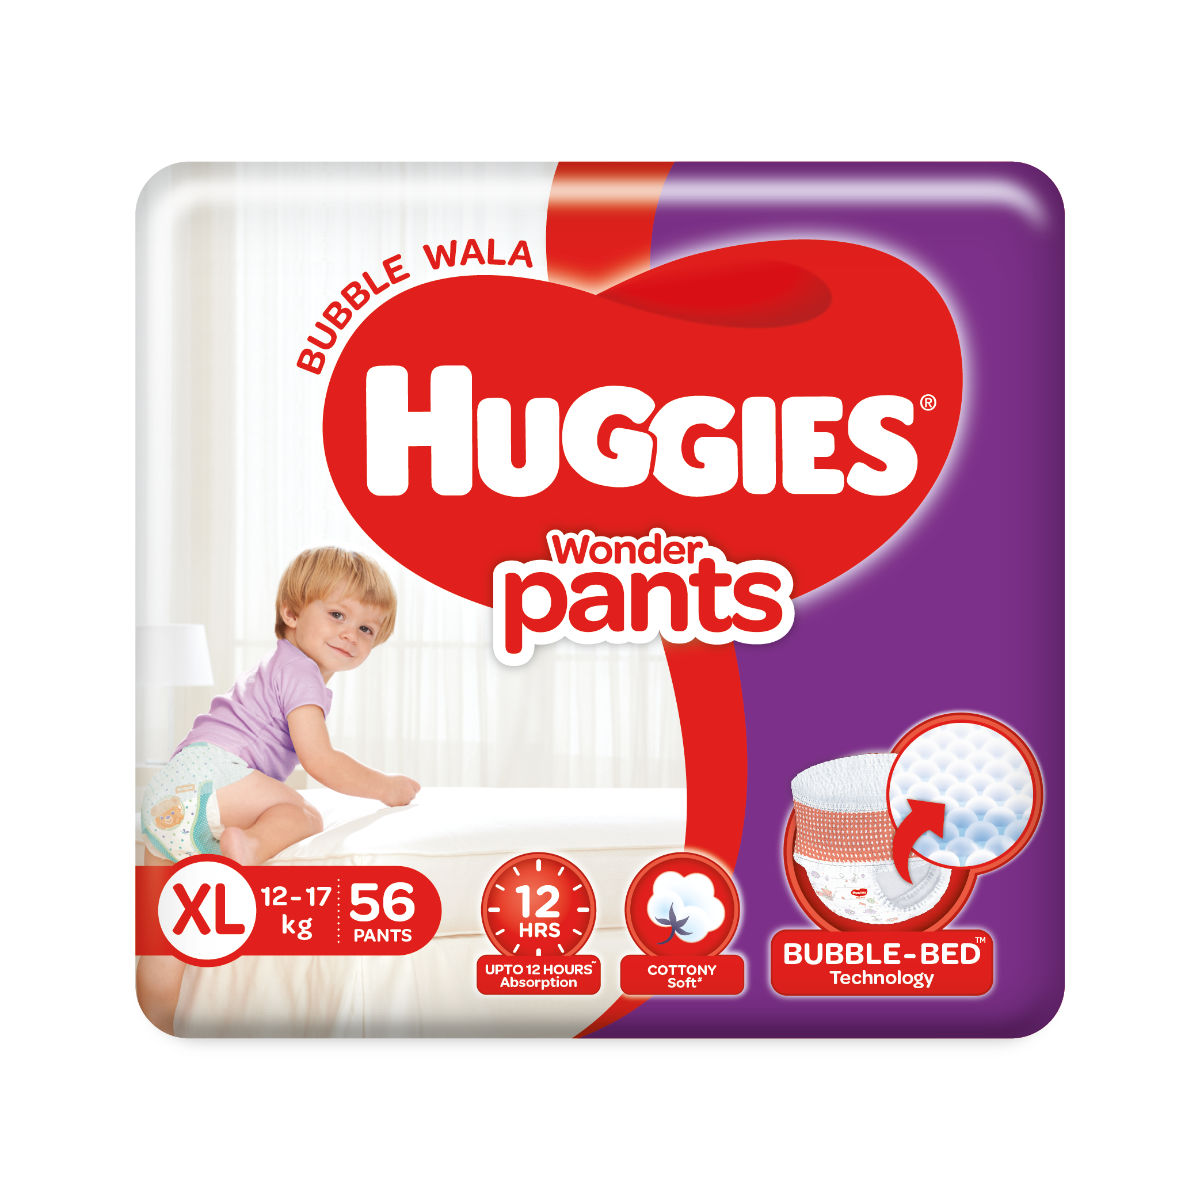 Huggies Wonder Baby Diaper Pants XL, 56 Count, Pack of 1 